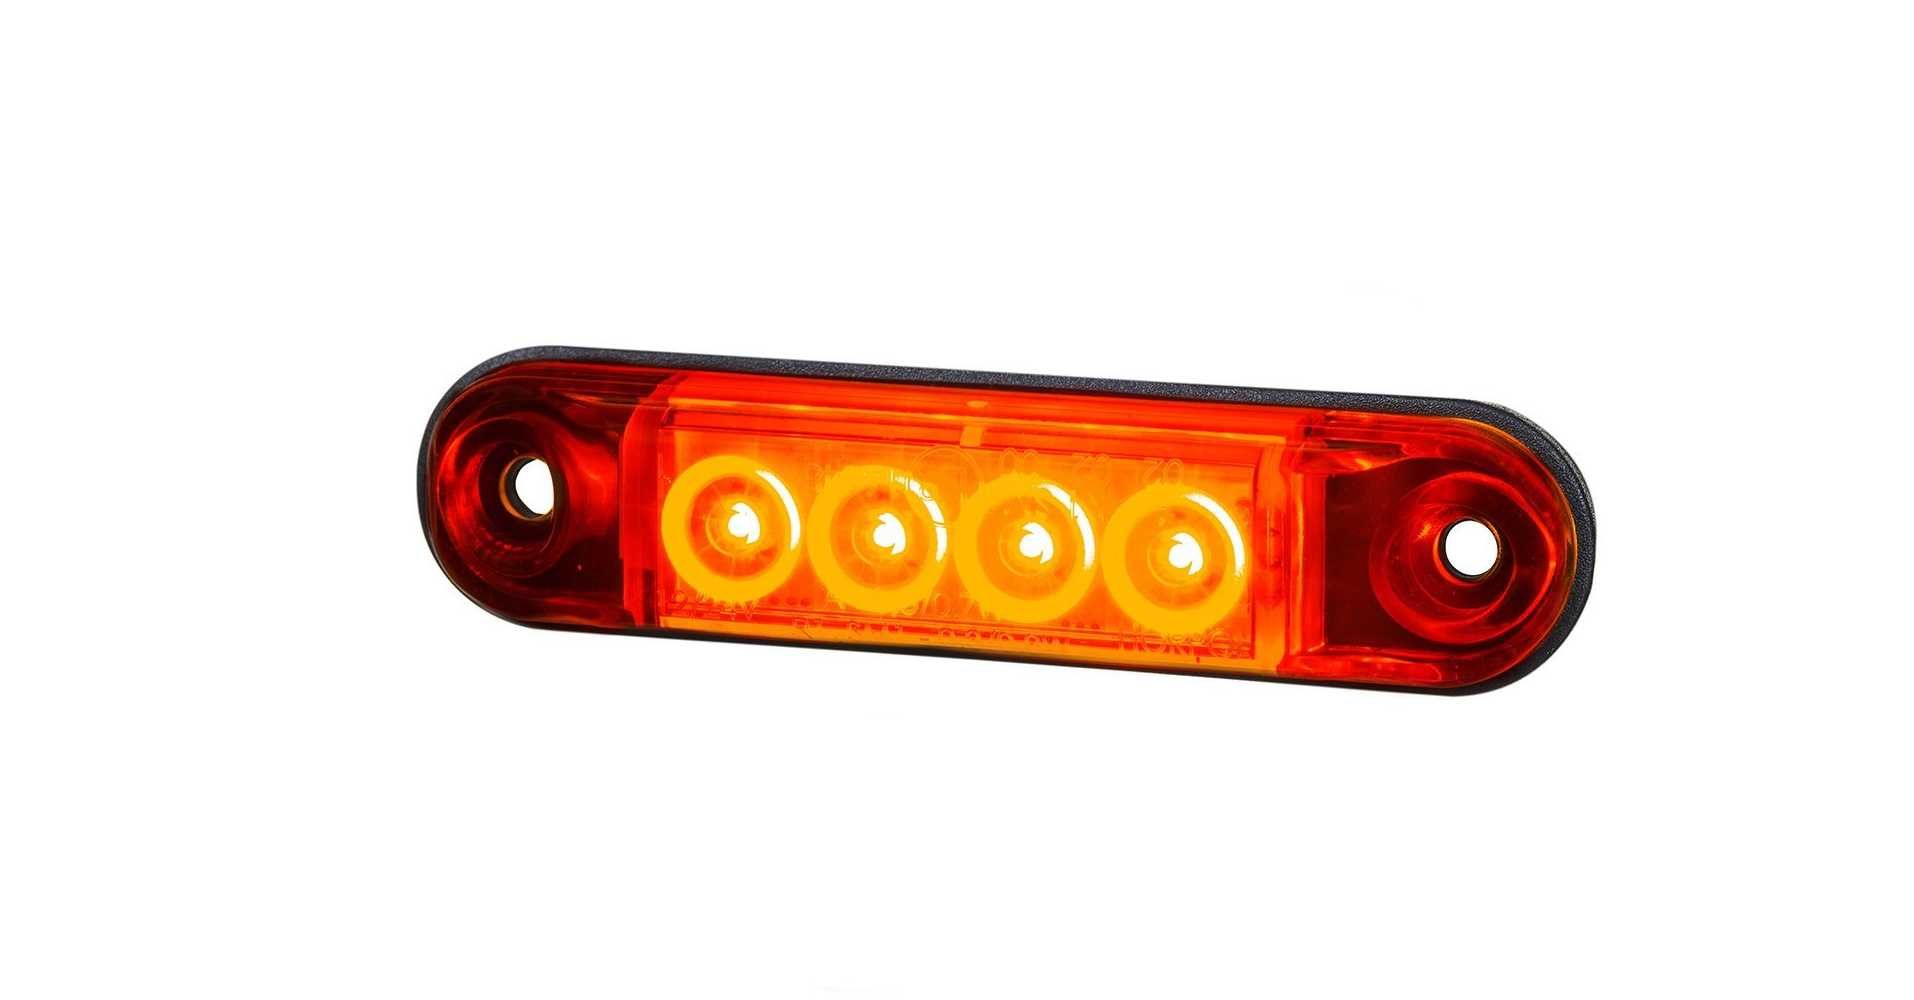 Horpol Lampa obrysowa typu SLIM 2329 (czerwona)